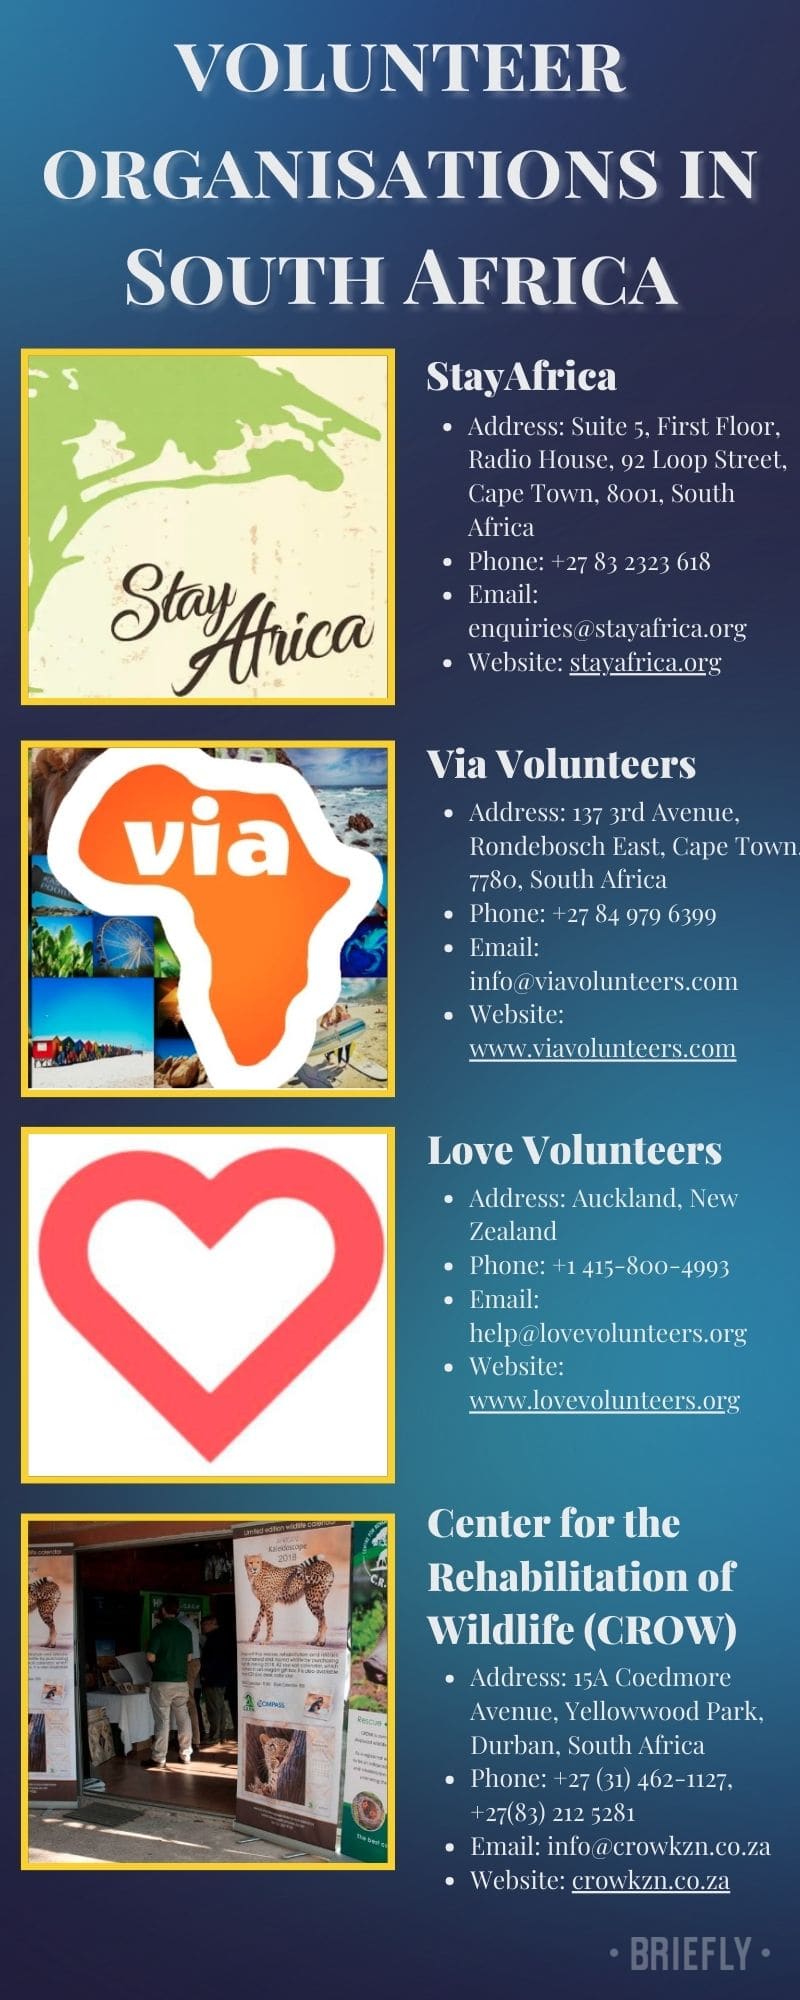 Volunteer organizations in South Africa